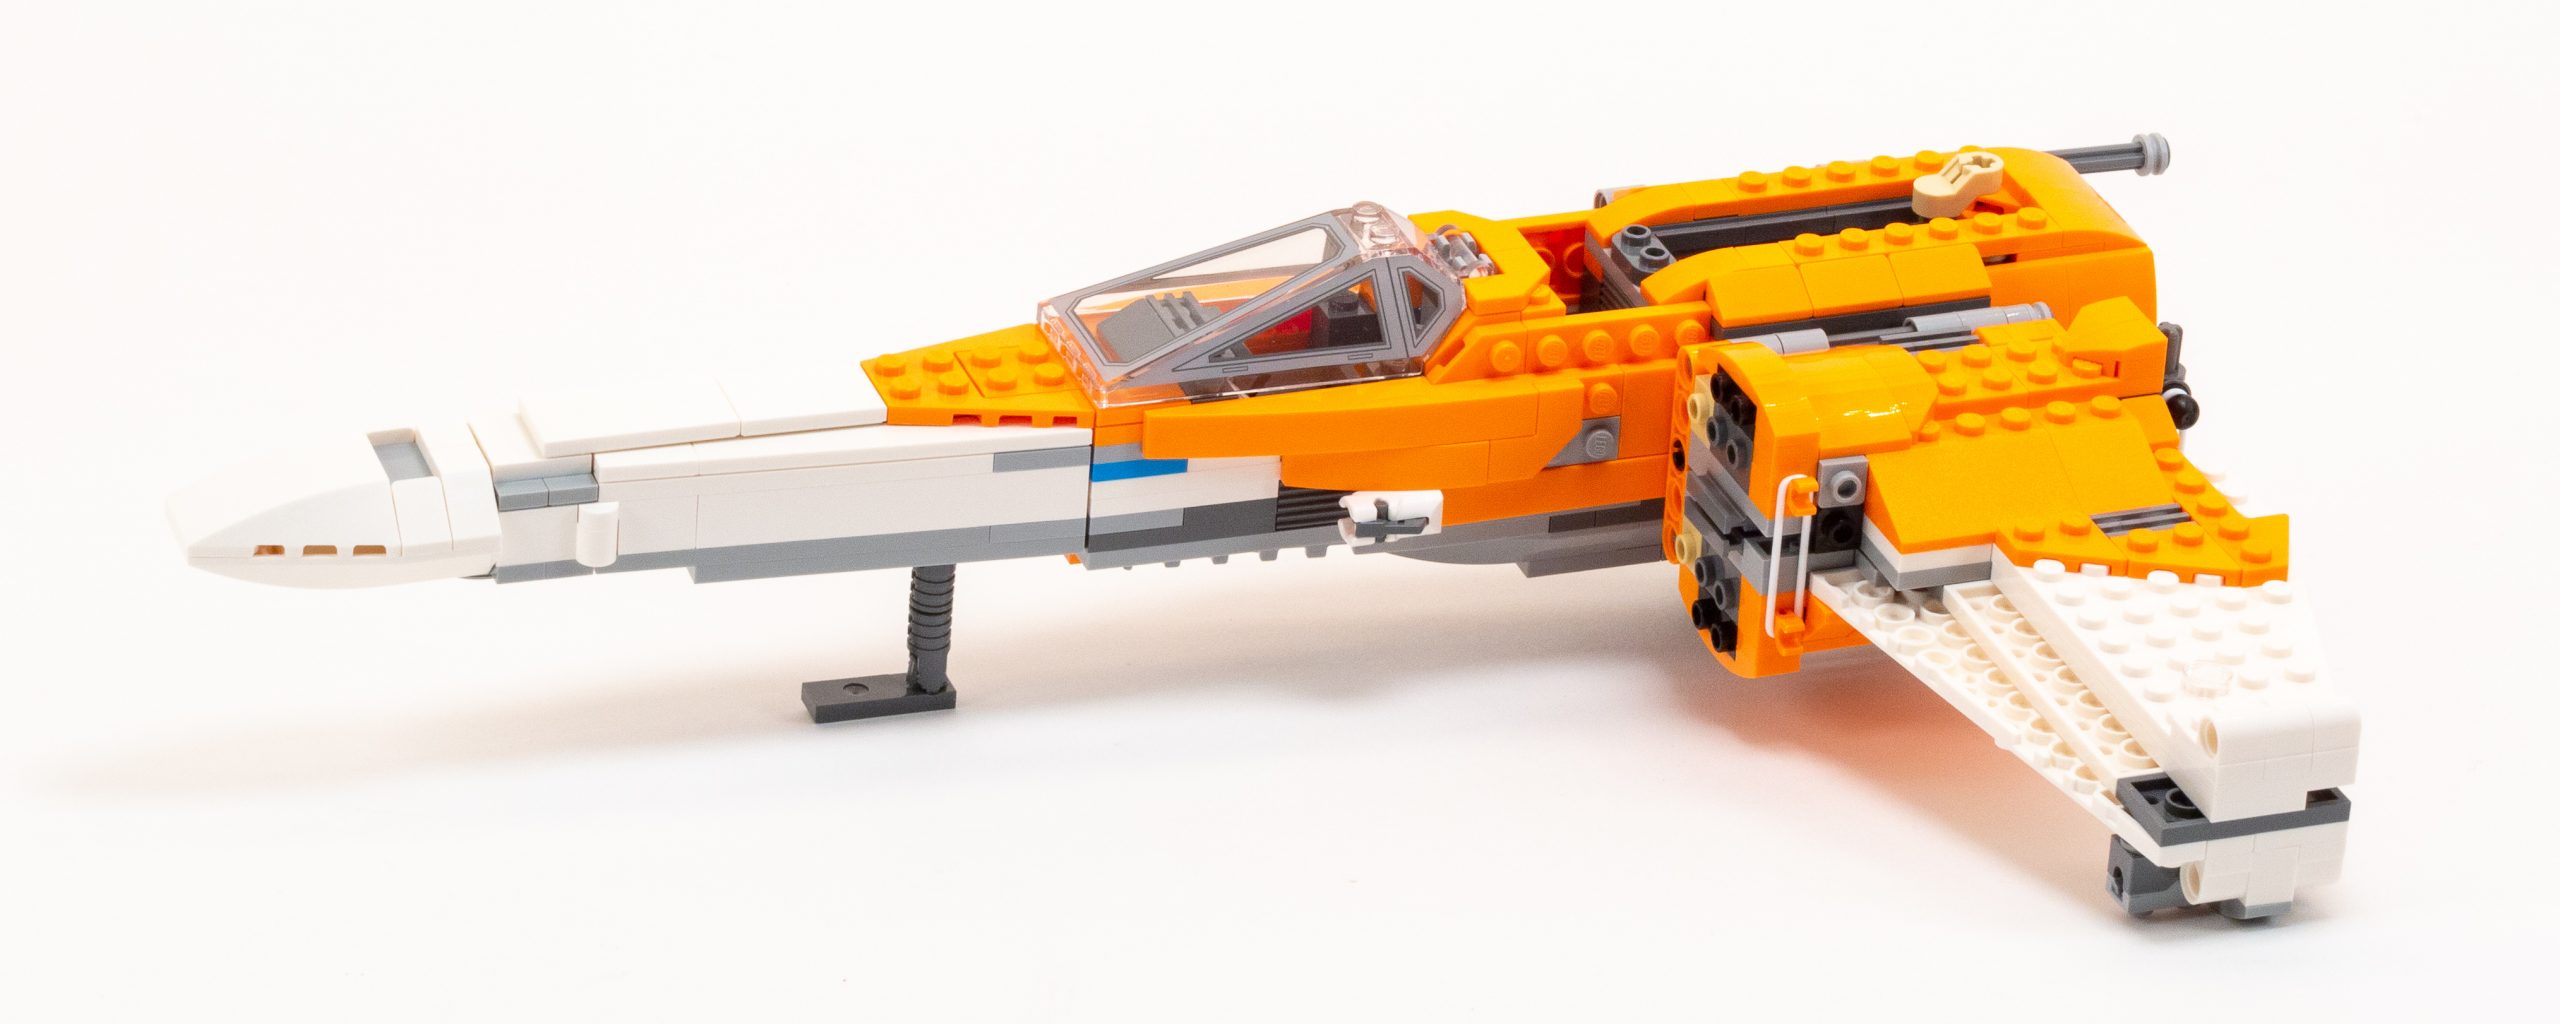 Kom forbi for at vide det ifølge forbedre Review: #75273 Poe Dameron's X-wing Fighter - BRICK ARCHITECT